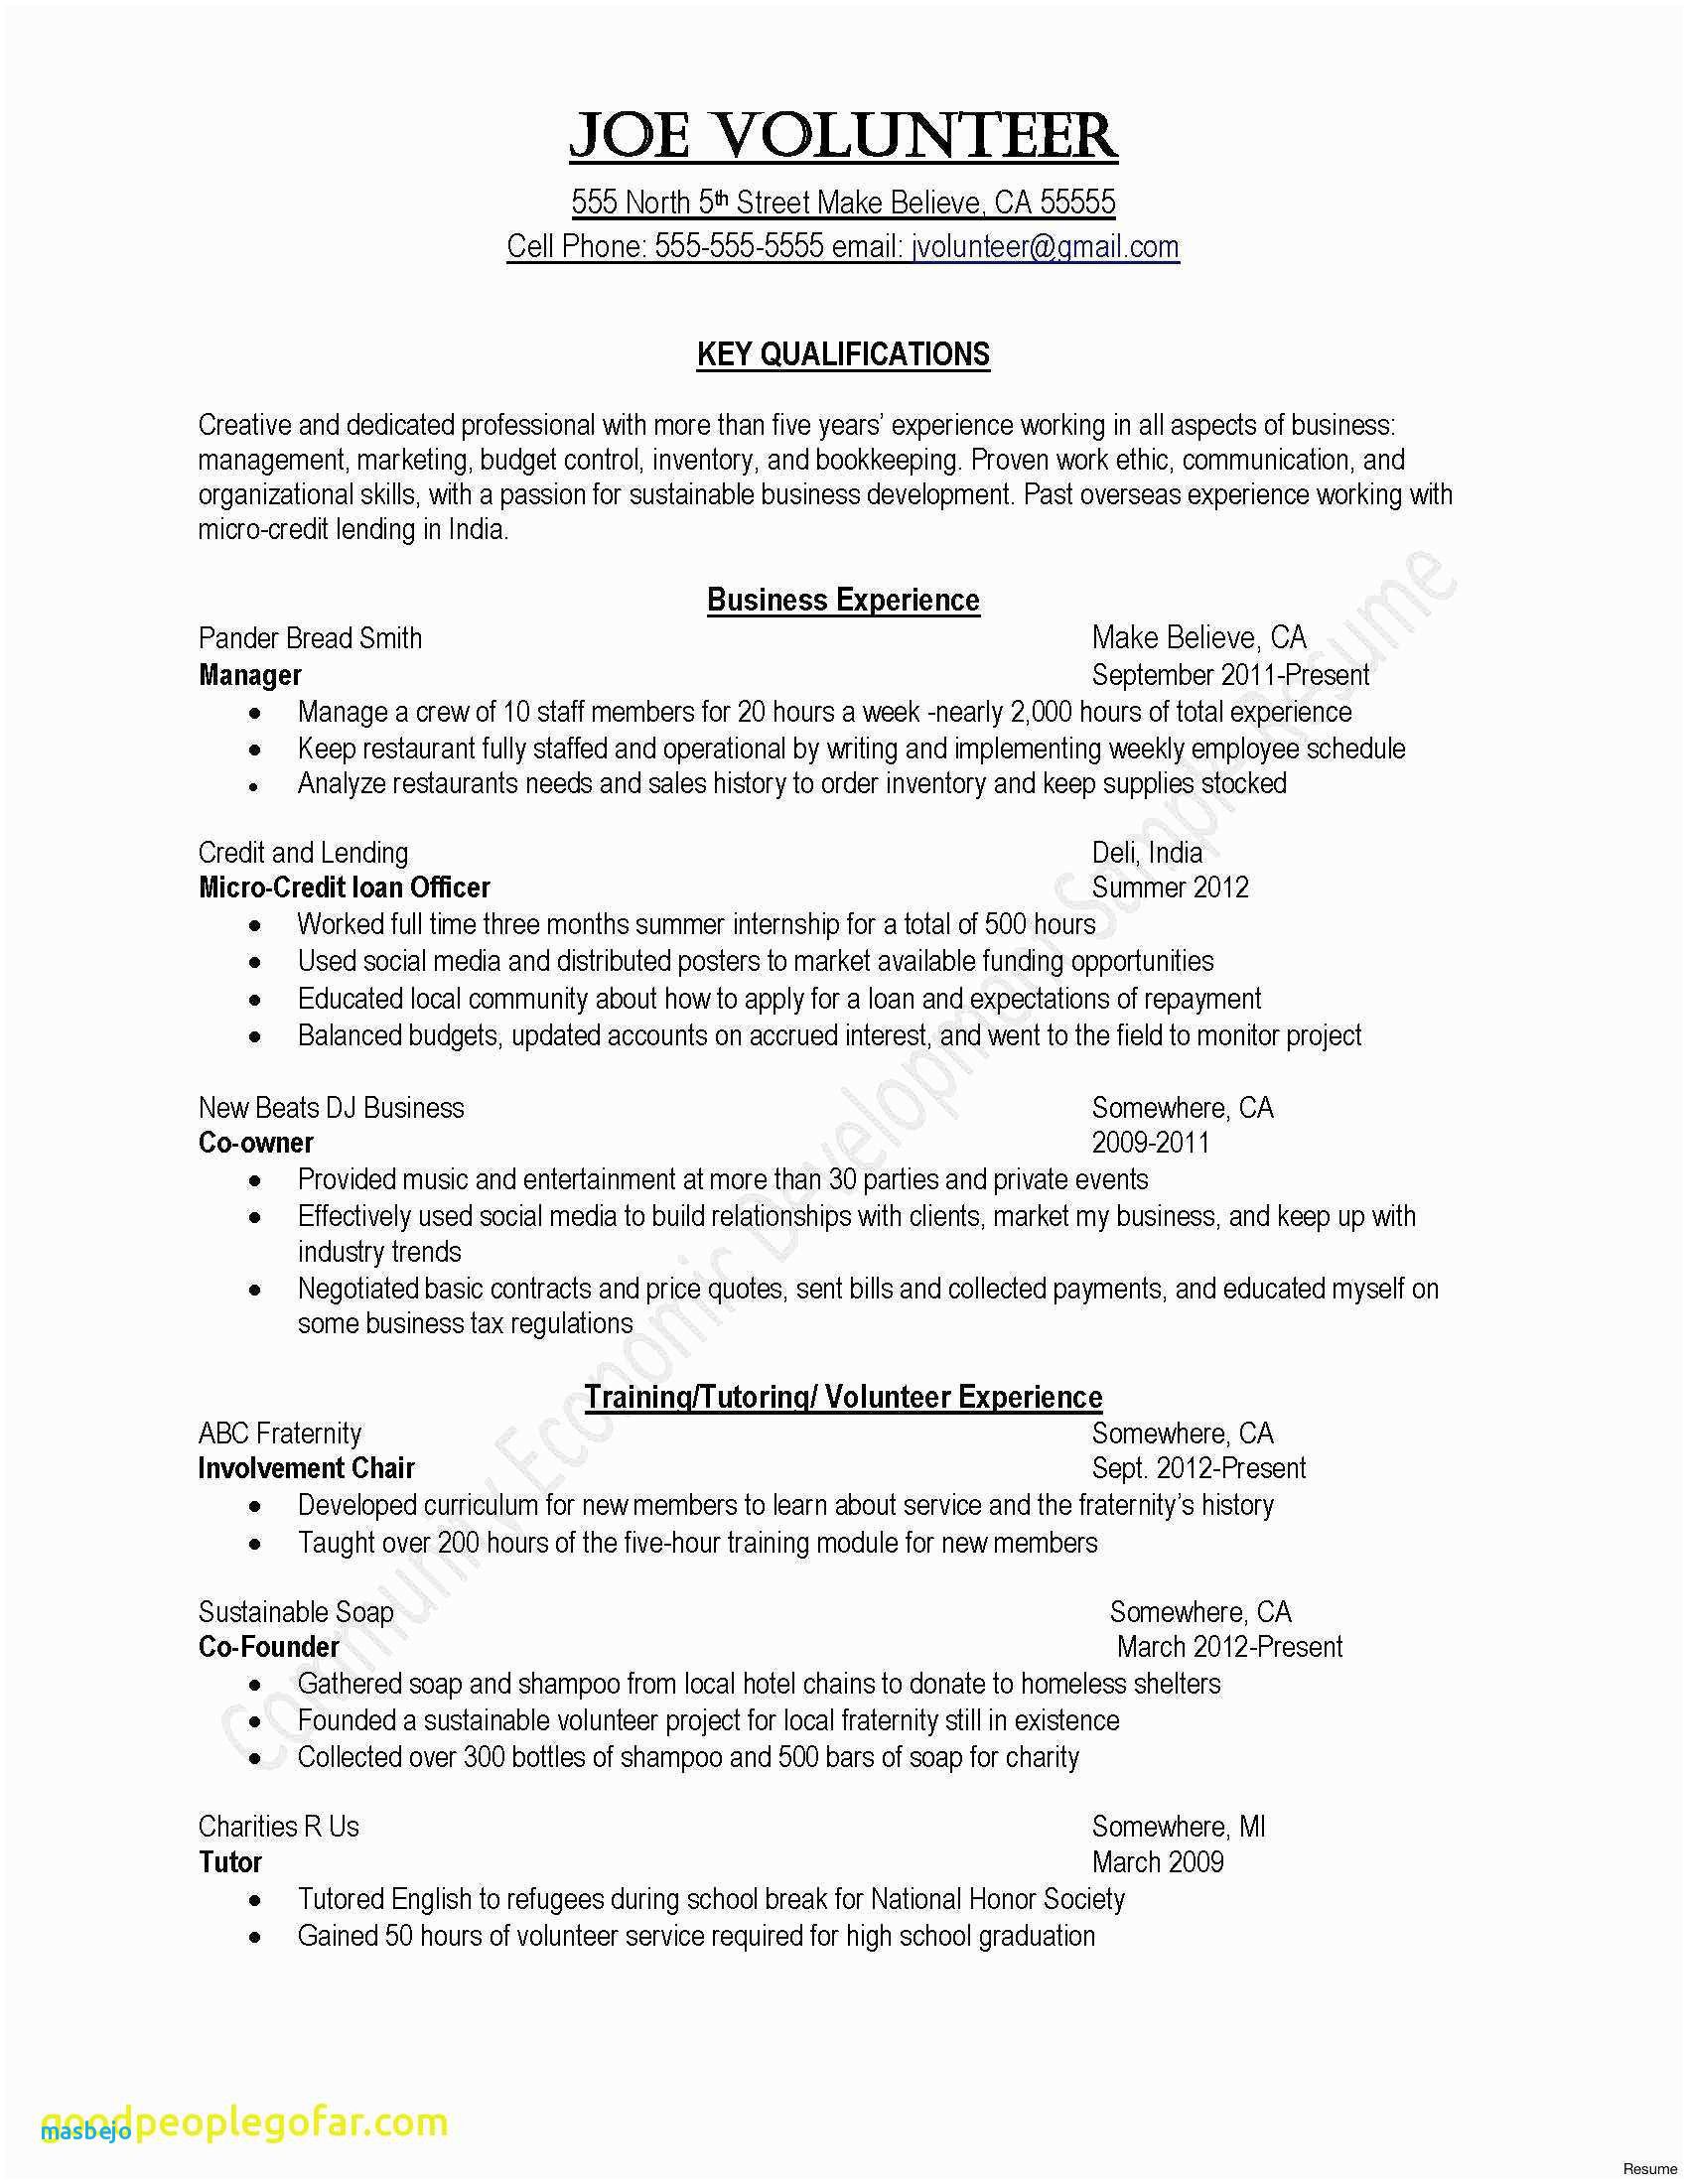 dance resume template